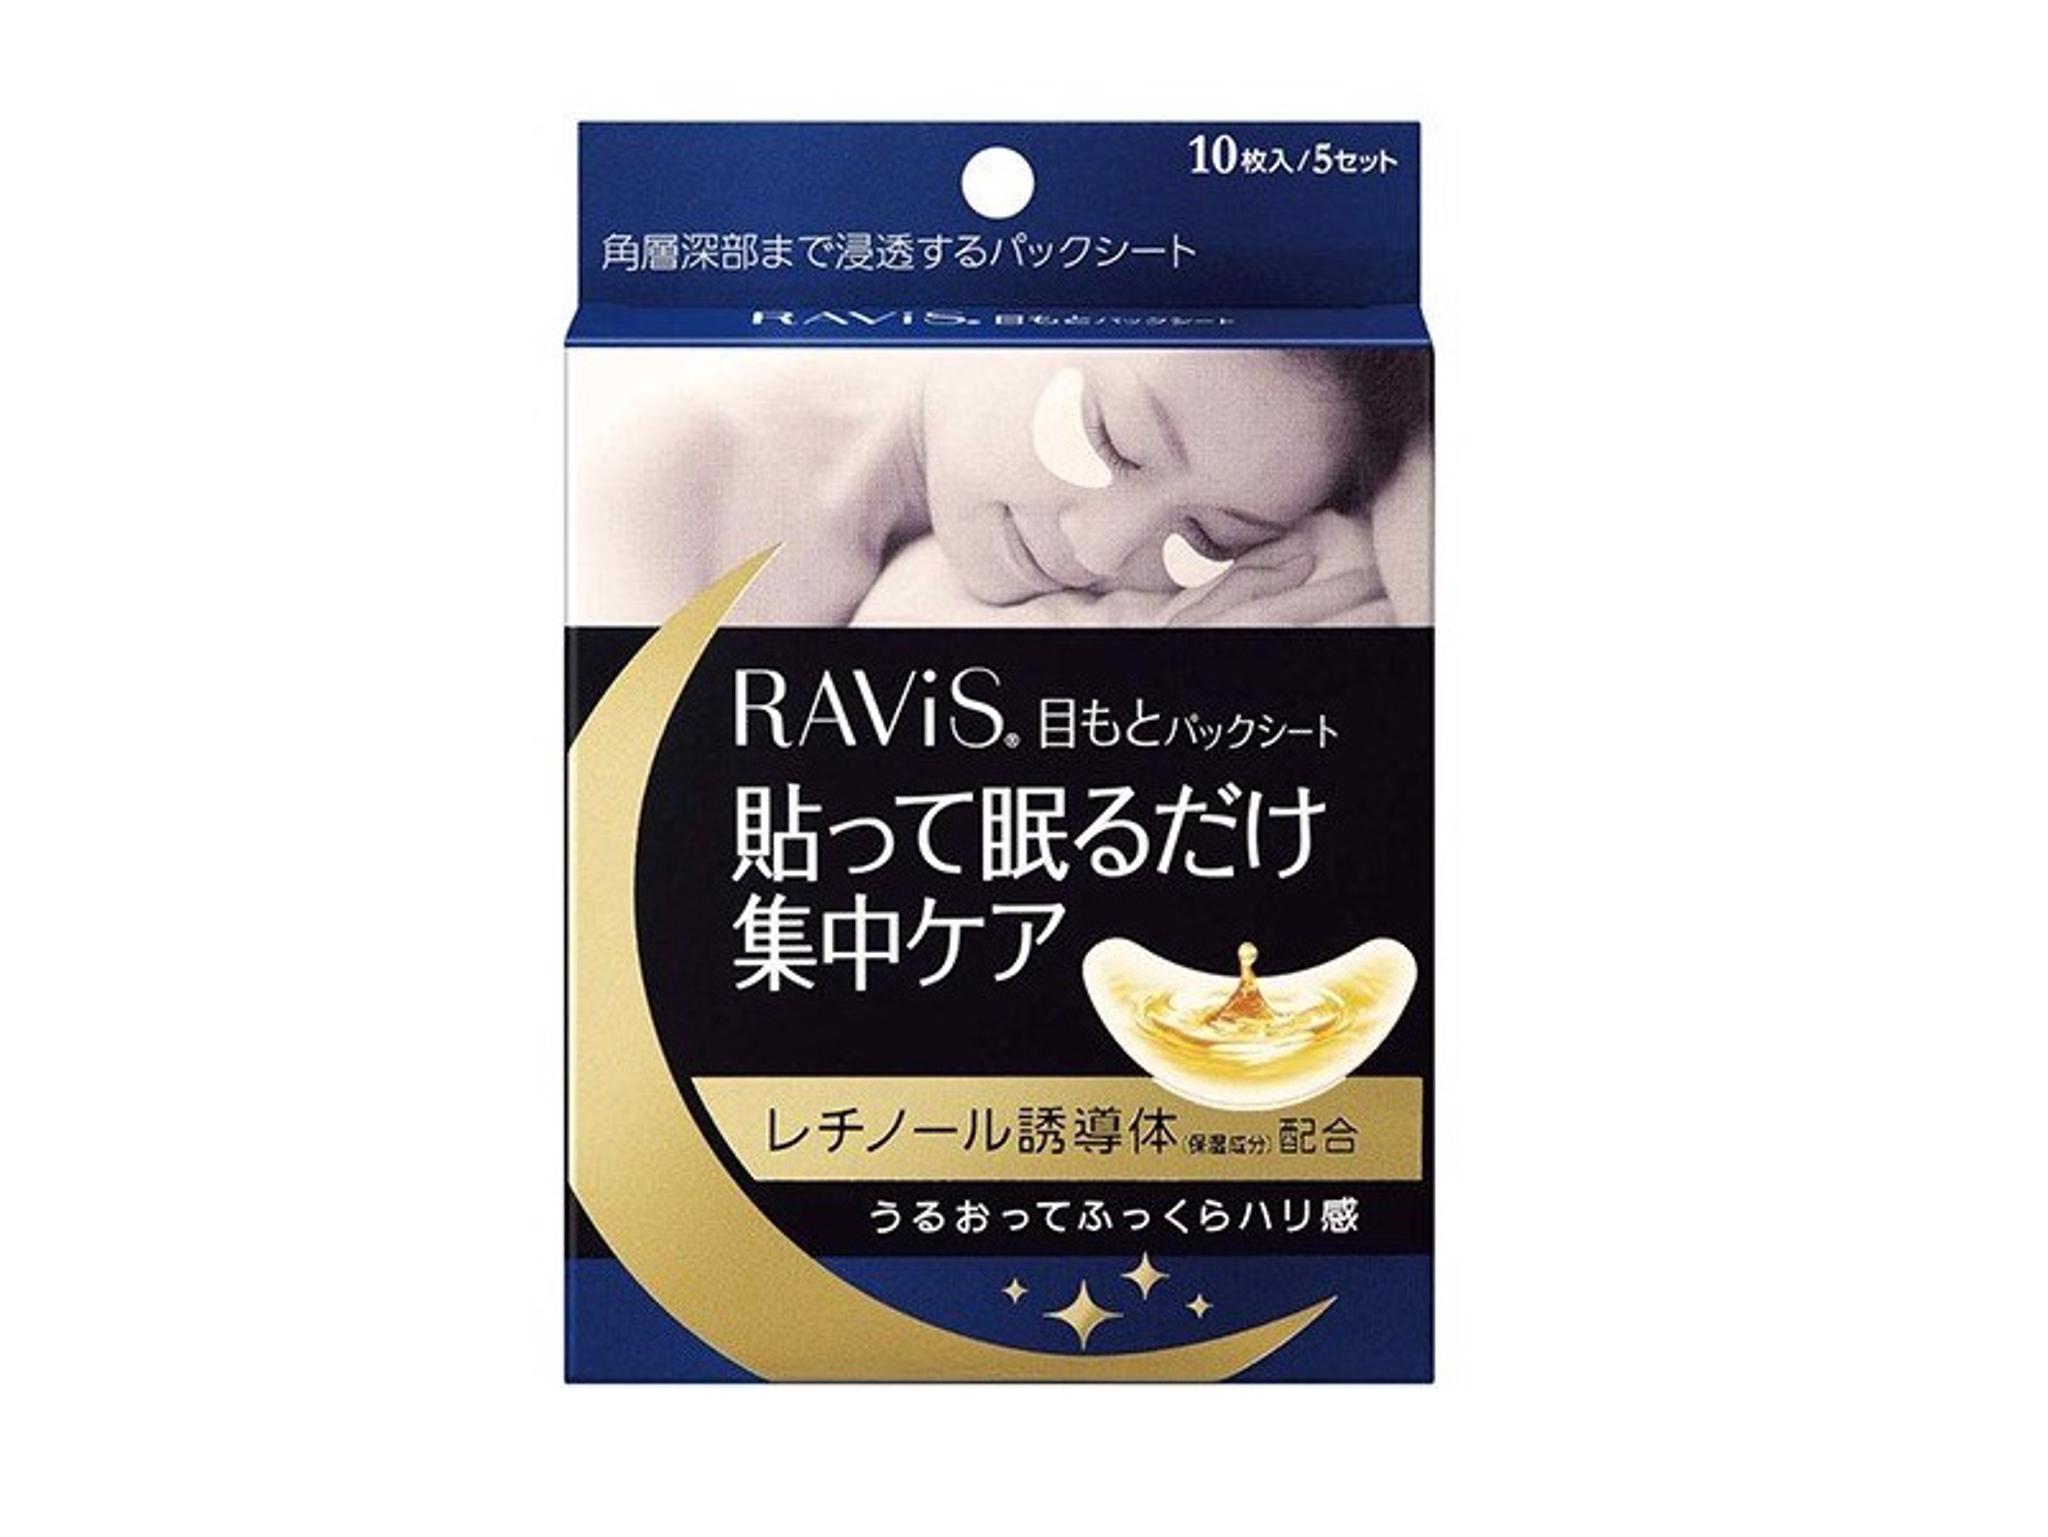 Ravis - Eye Pack (10 sheets) 2430